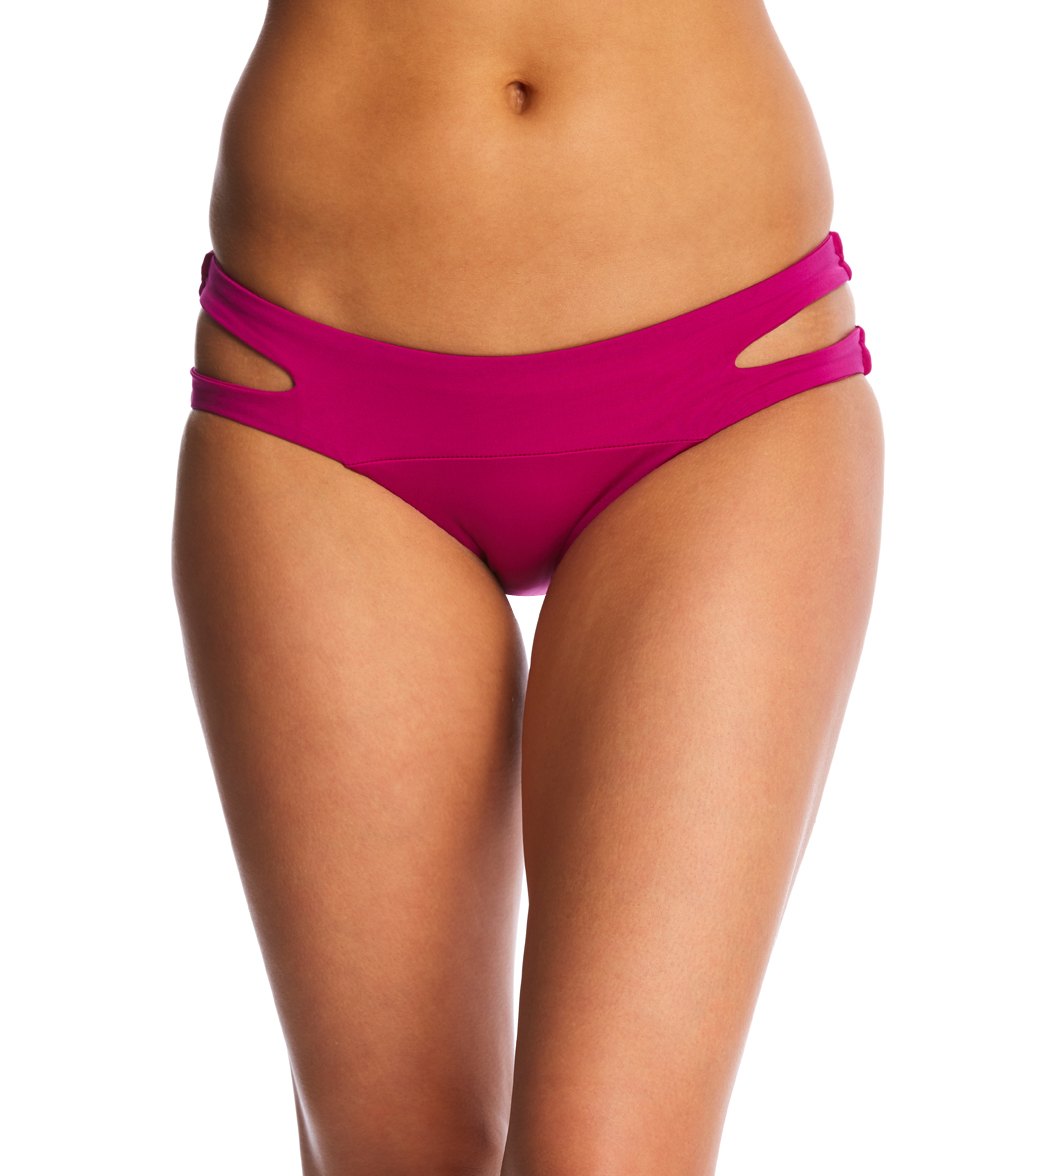 Aerin Rose Dahlia X-Cut Bikini Bottom - X-Small - Swimoutlet.com